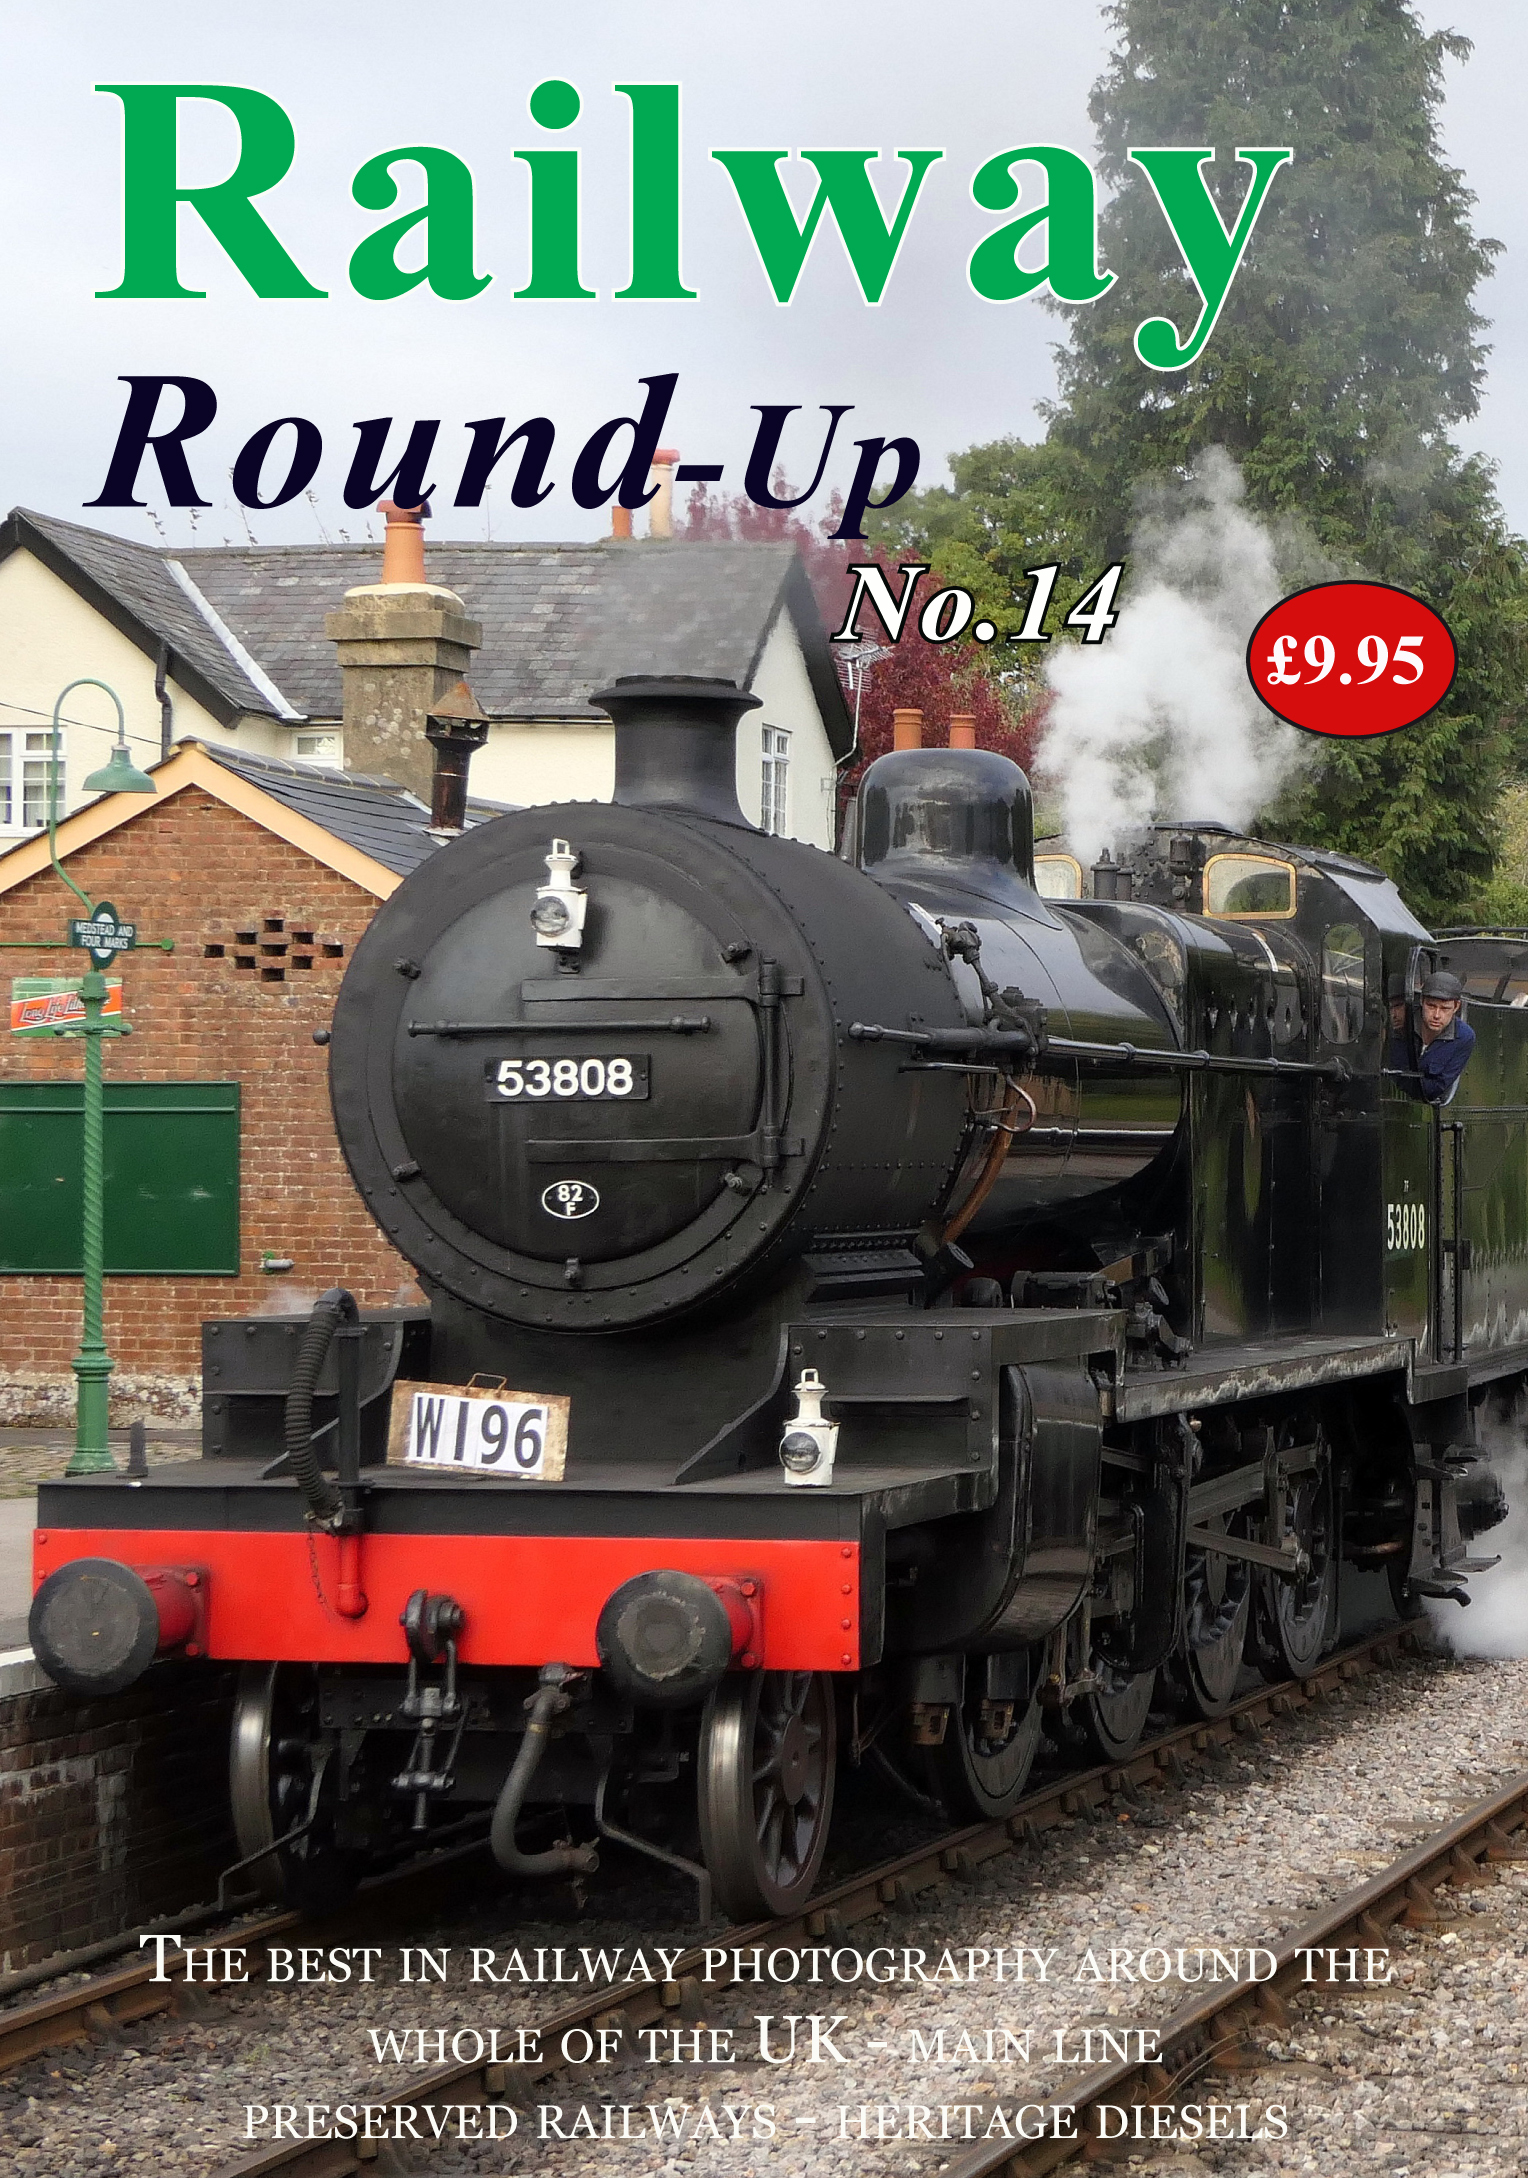 Railway Round-Up No.14